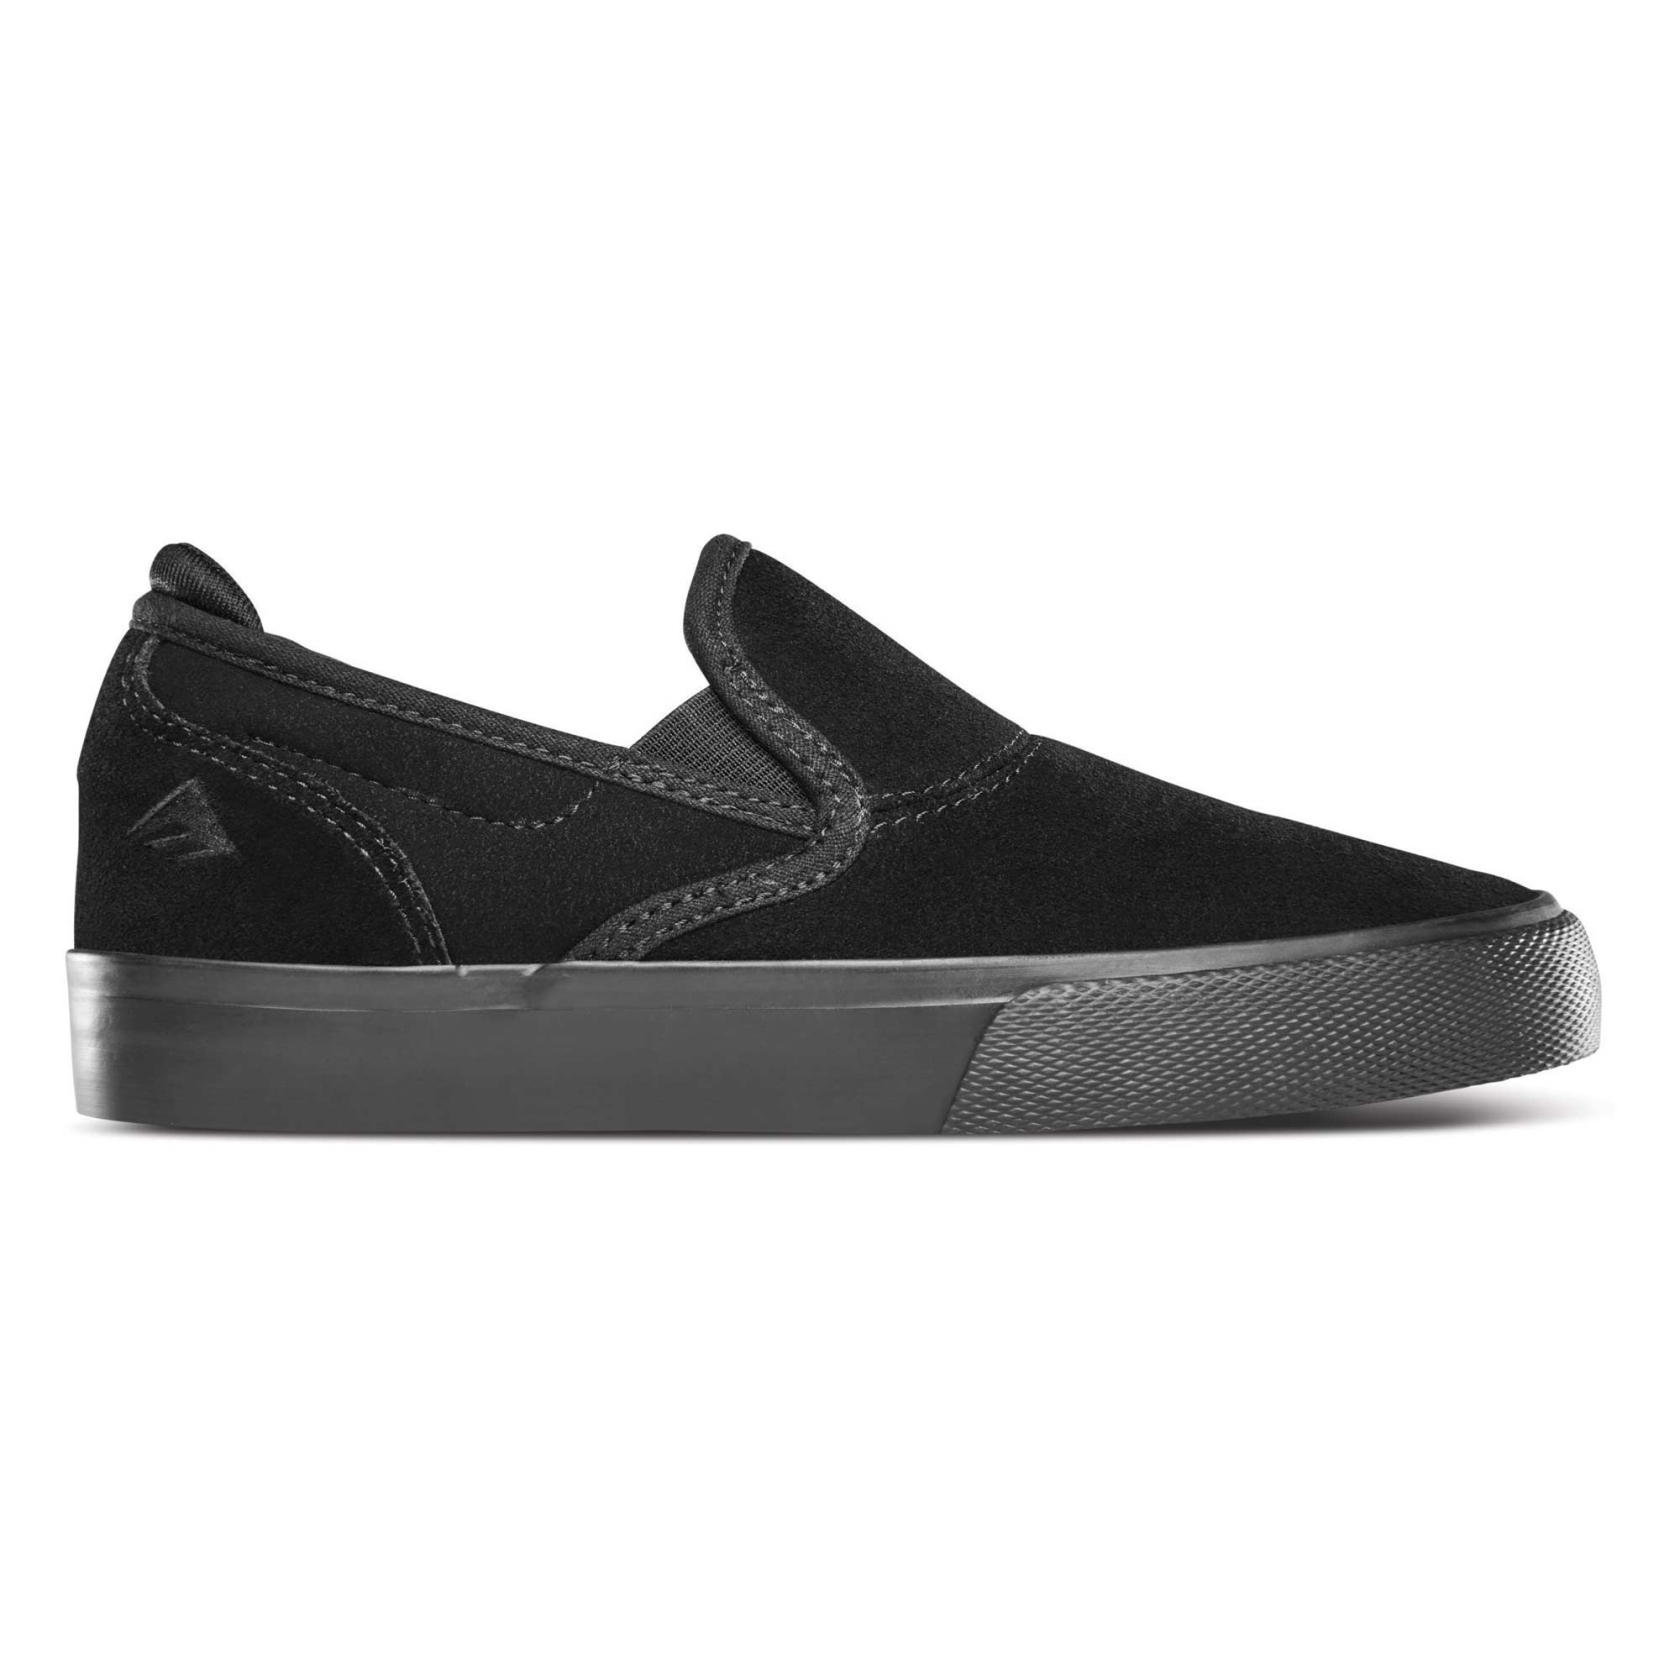 EMERICA Youths Shoe WINO G6 SLIP-ON bla/bla black/black